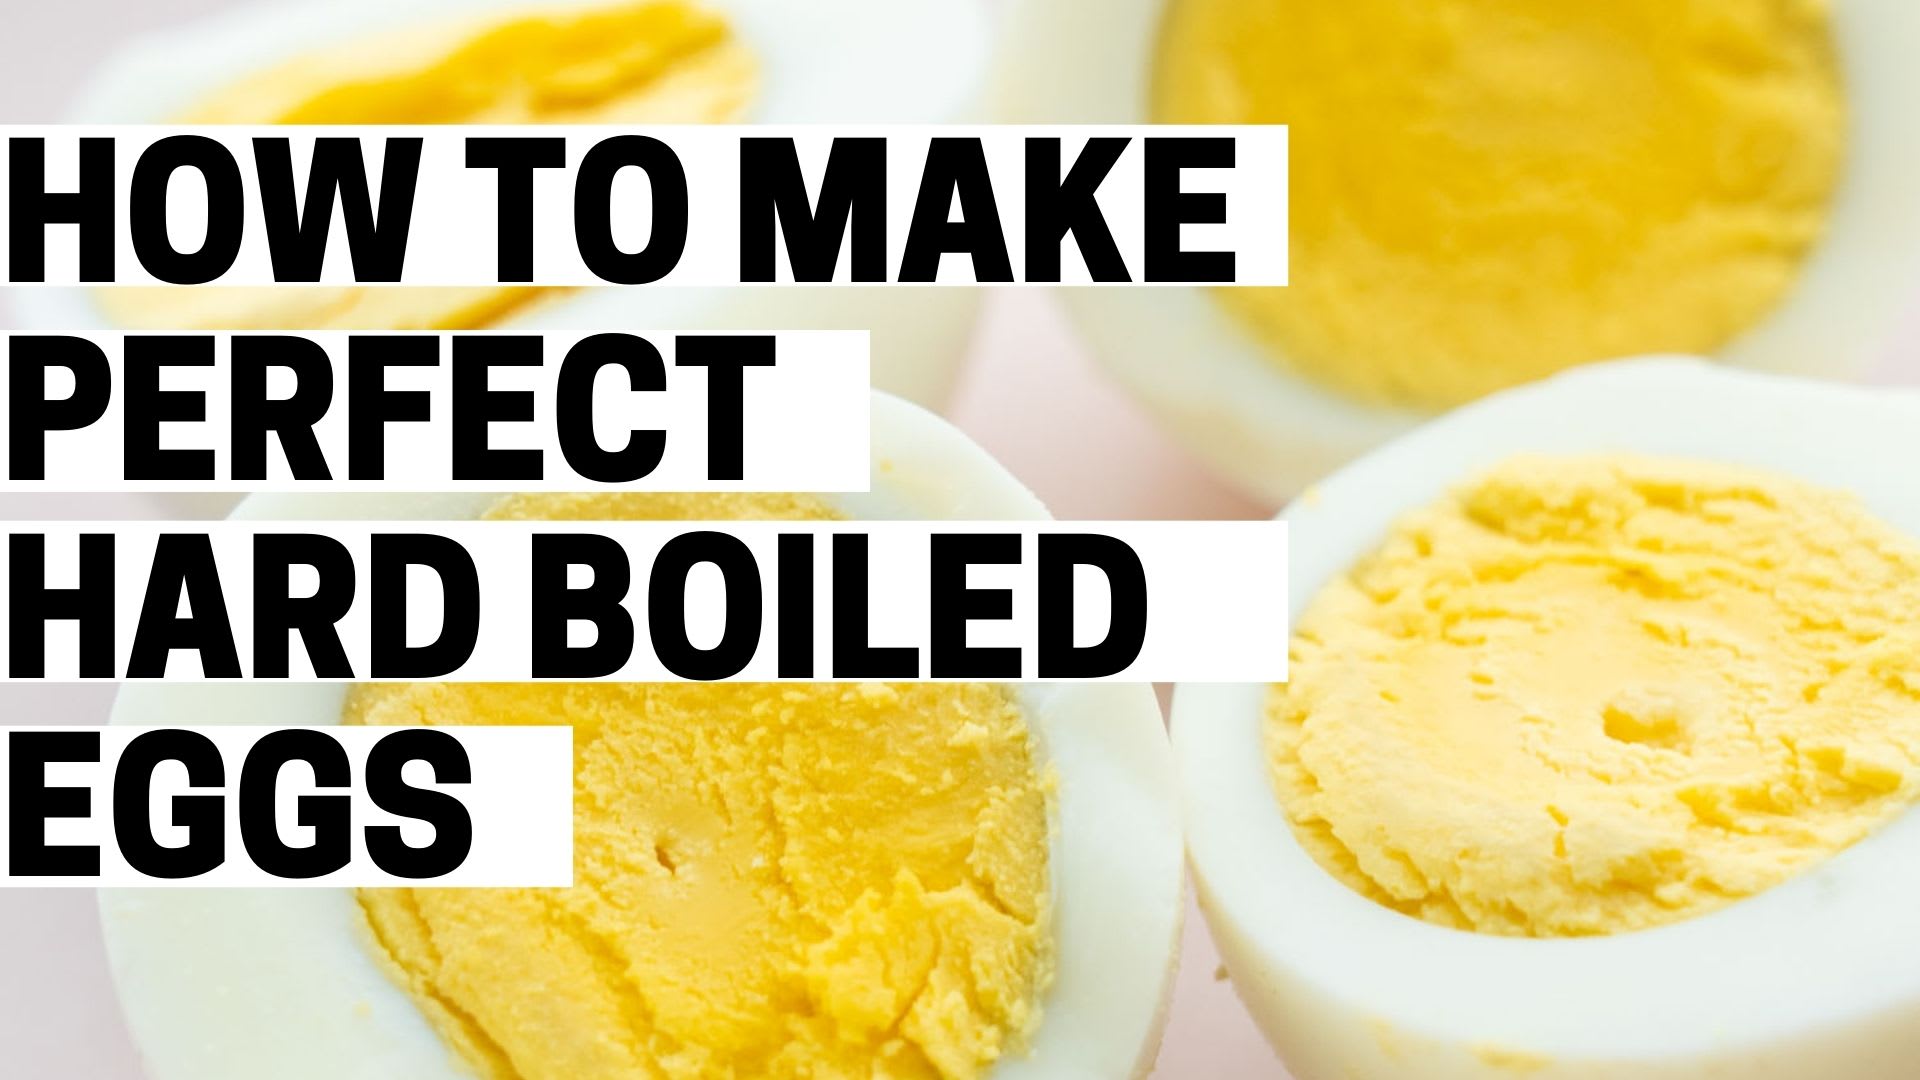 How to Make Perfect Hard Boiled Eggs - Brooklyn Farm Girl